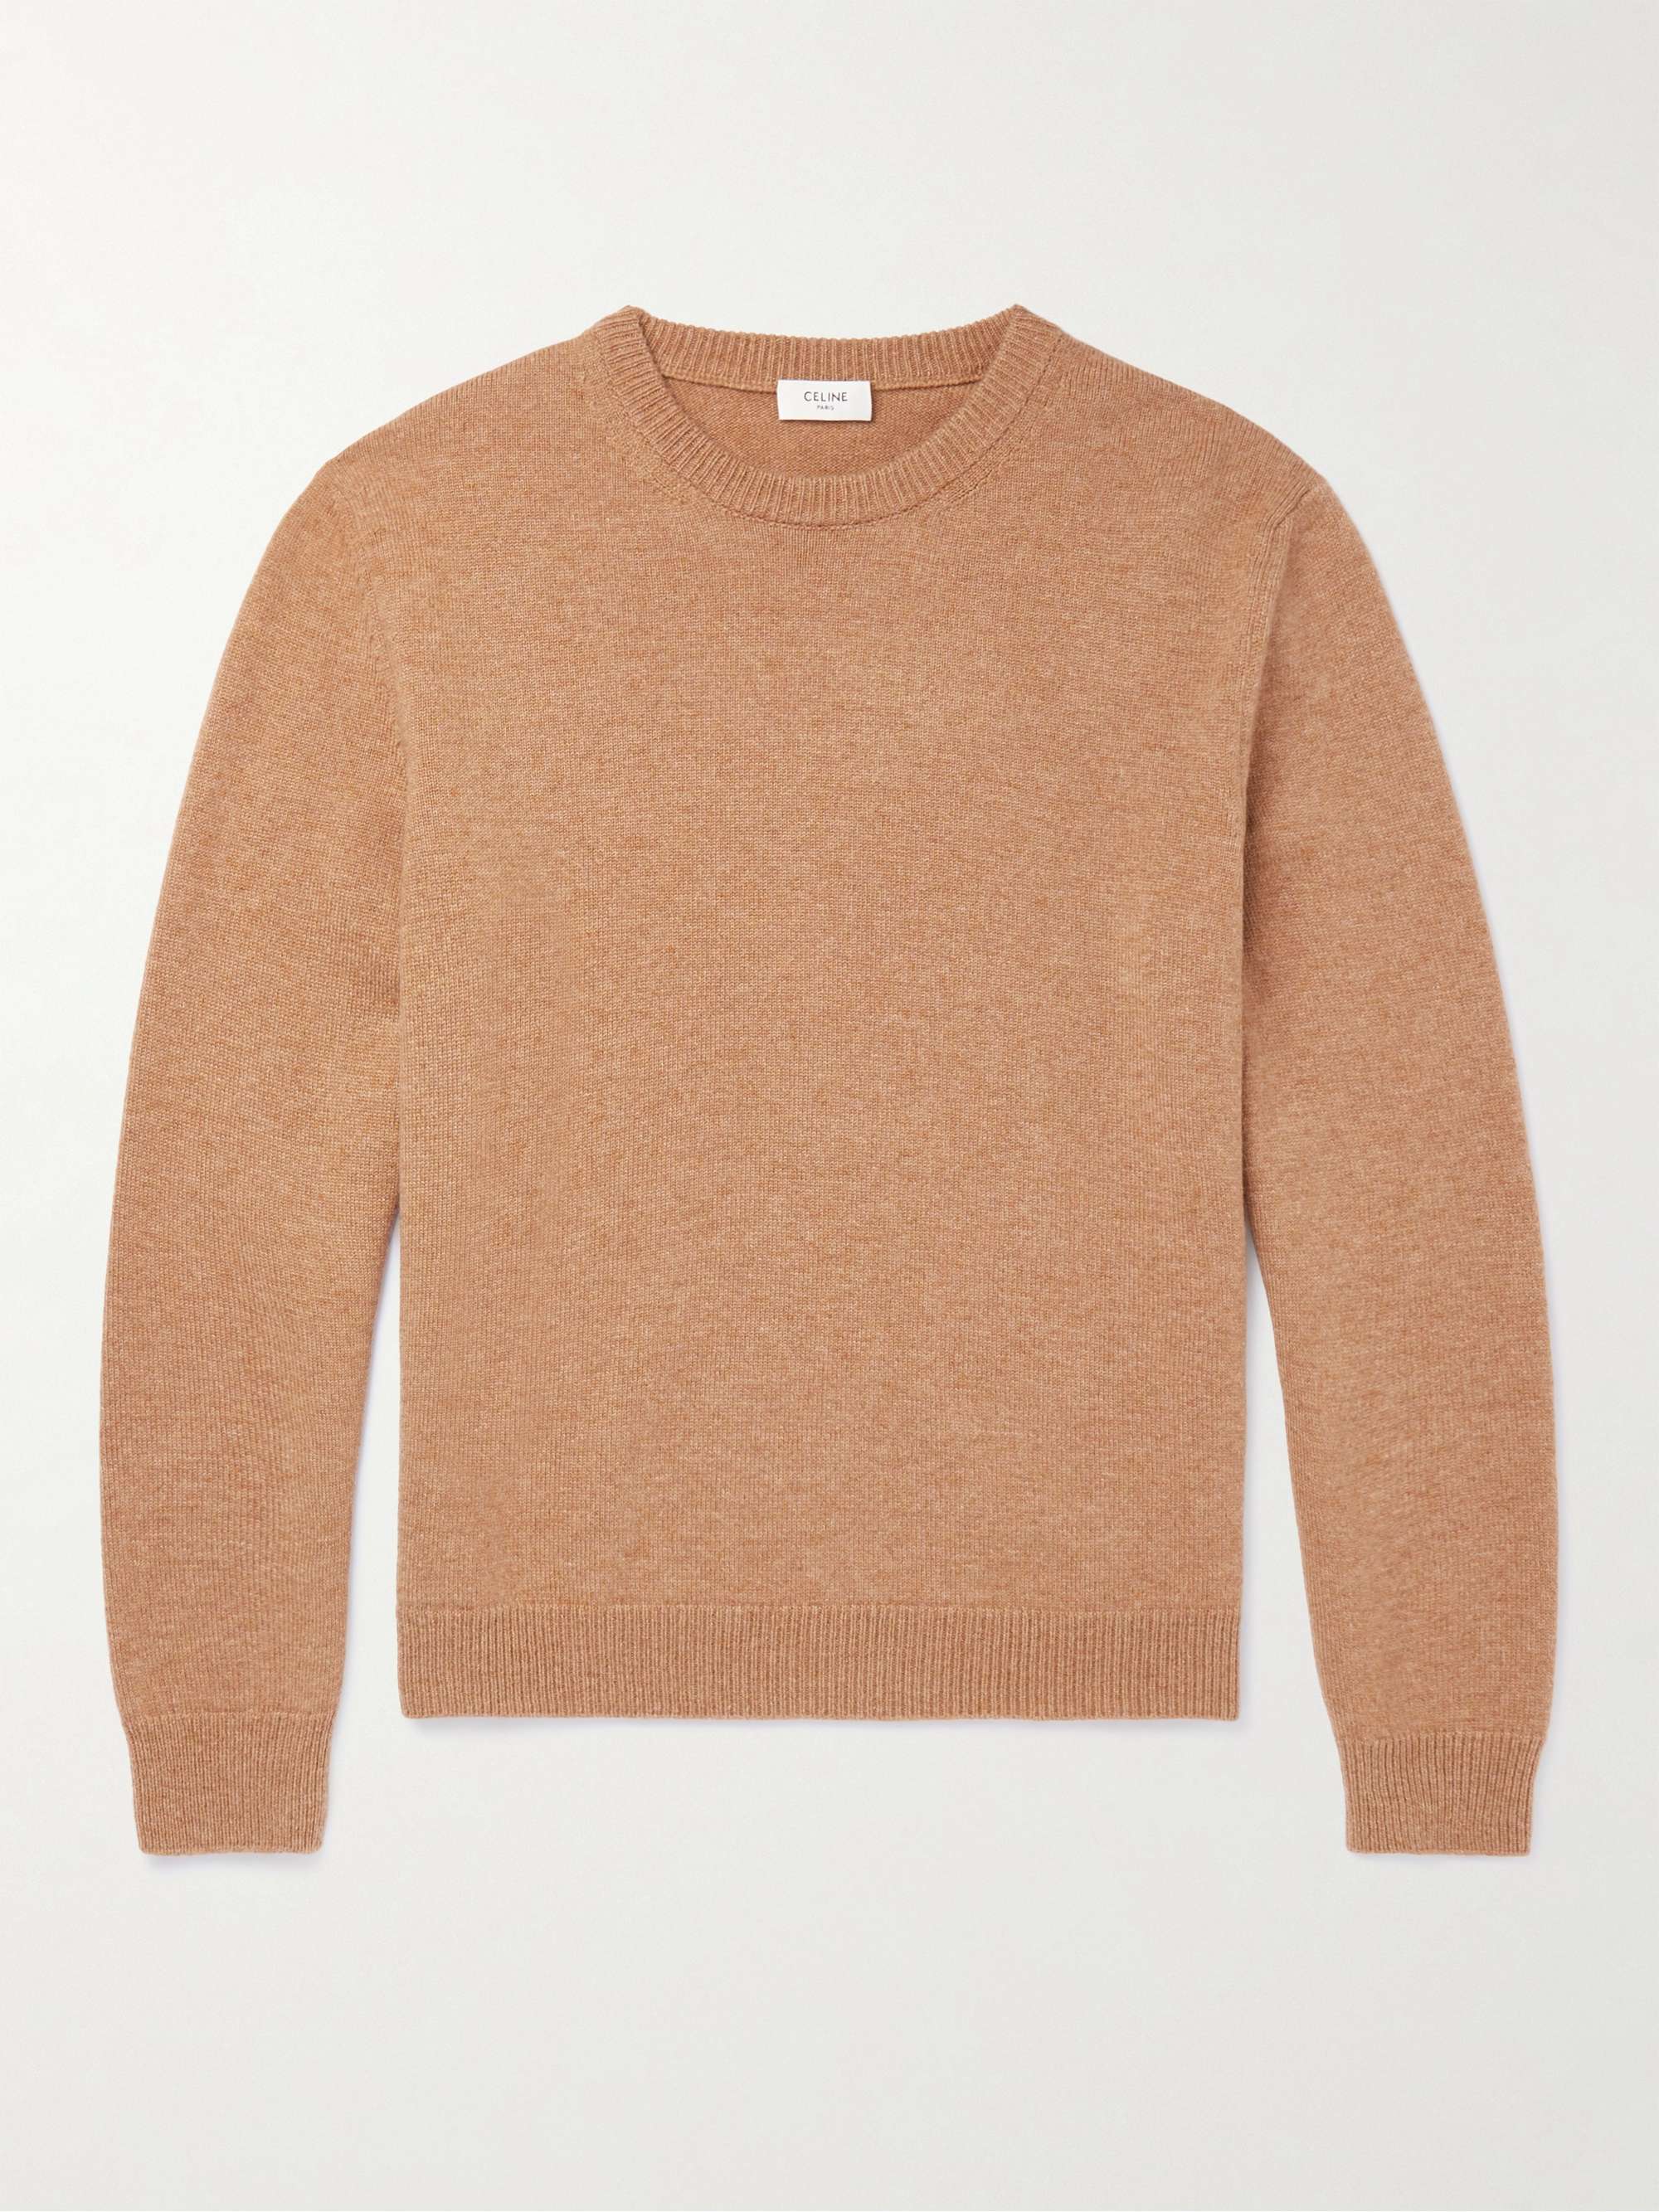 CELINE HOMME Cashmere Sweater